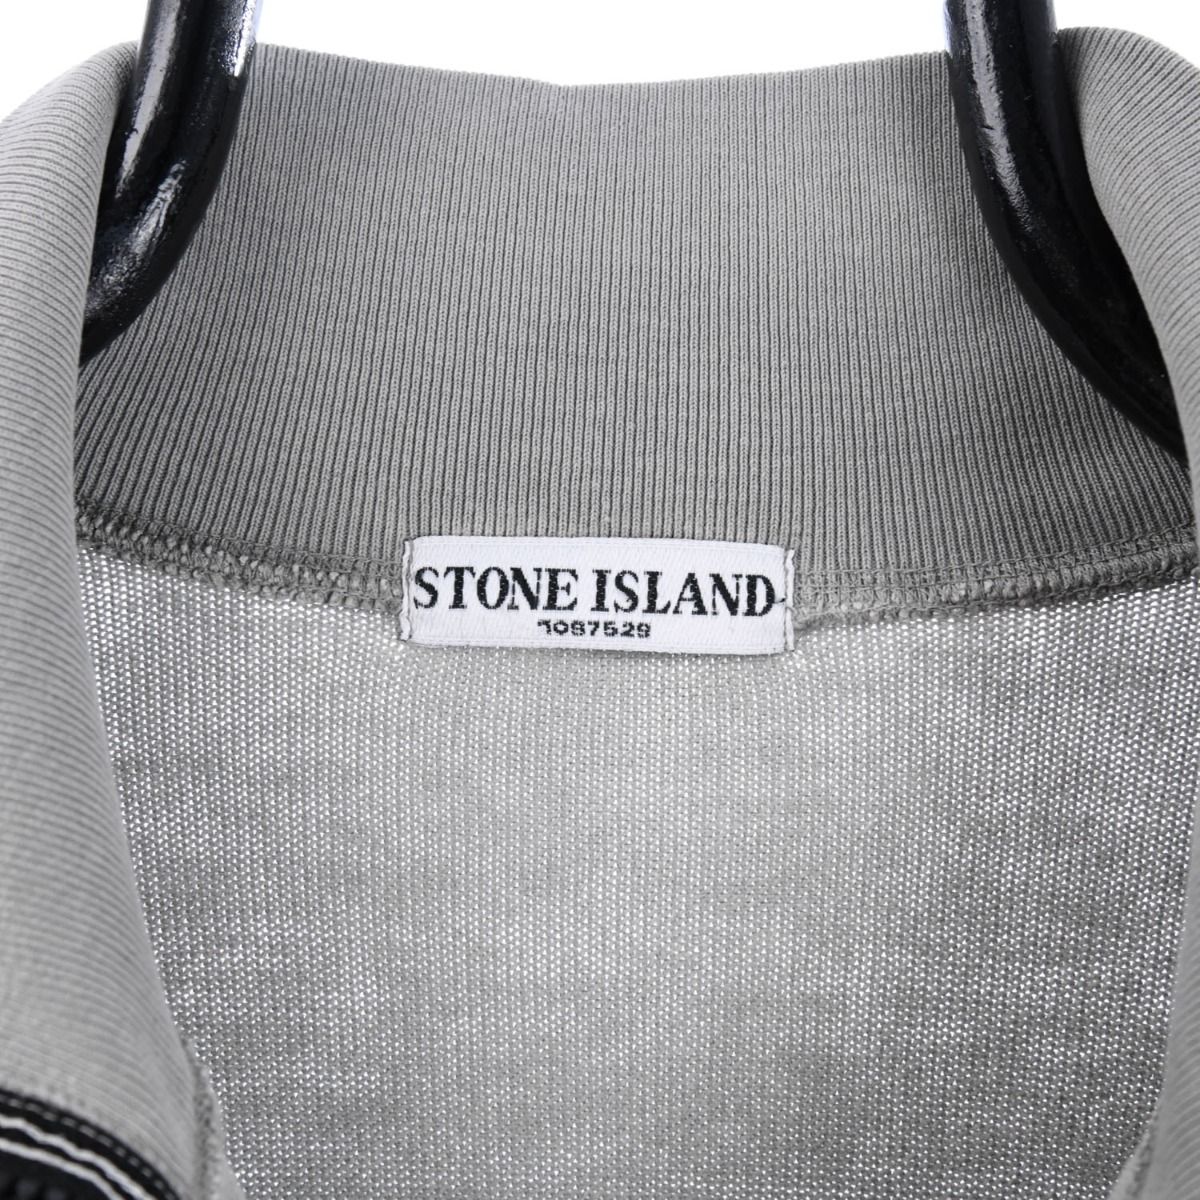 Stone Island A/W 2007 Funnel Neck Sweatshirt